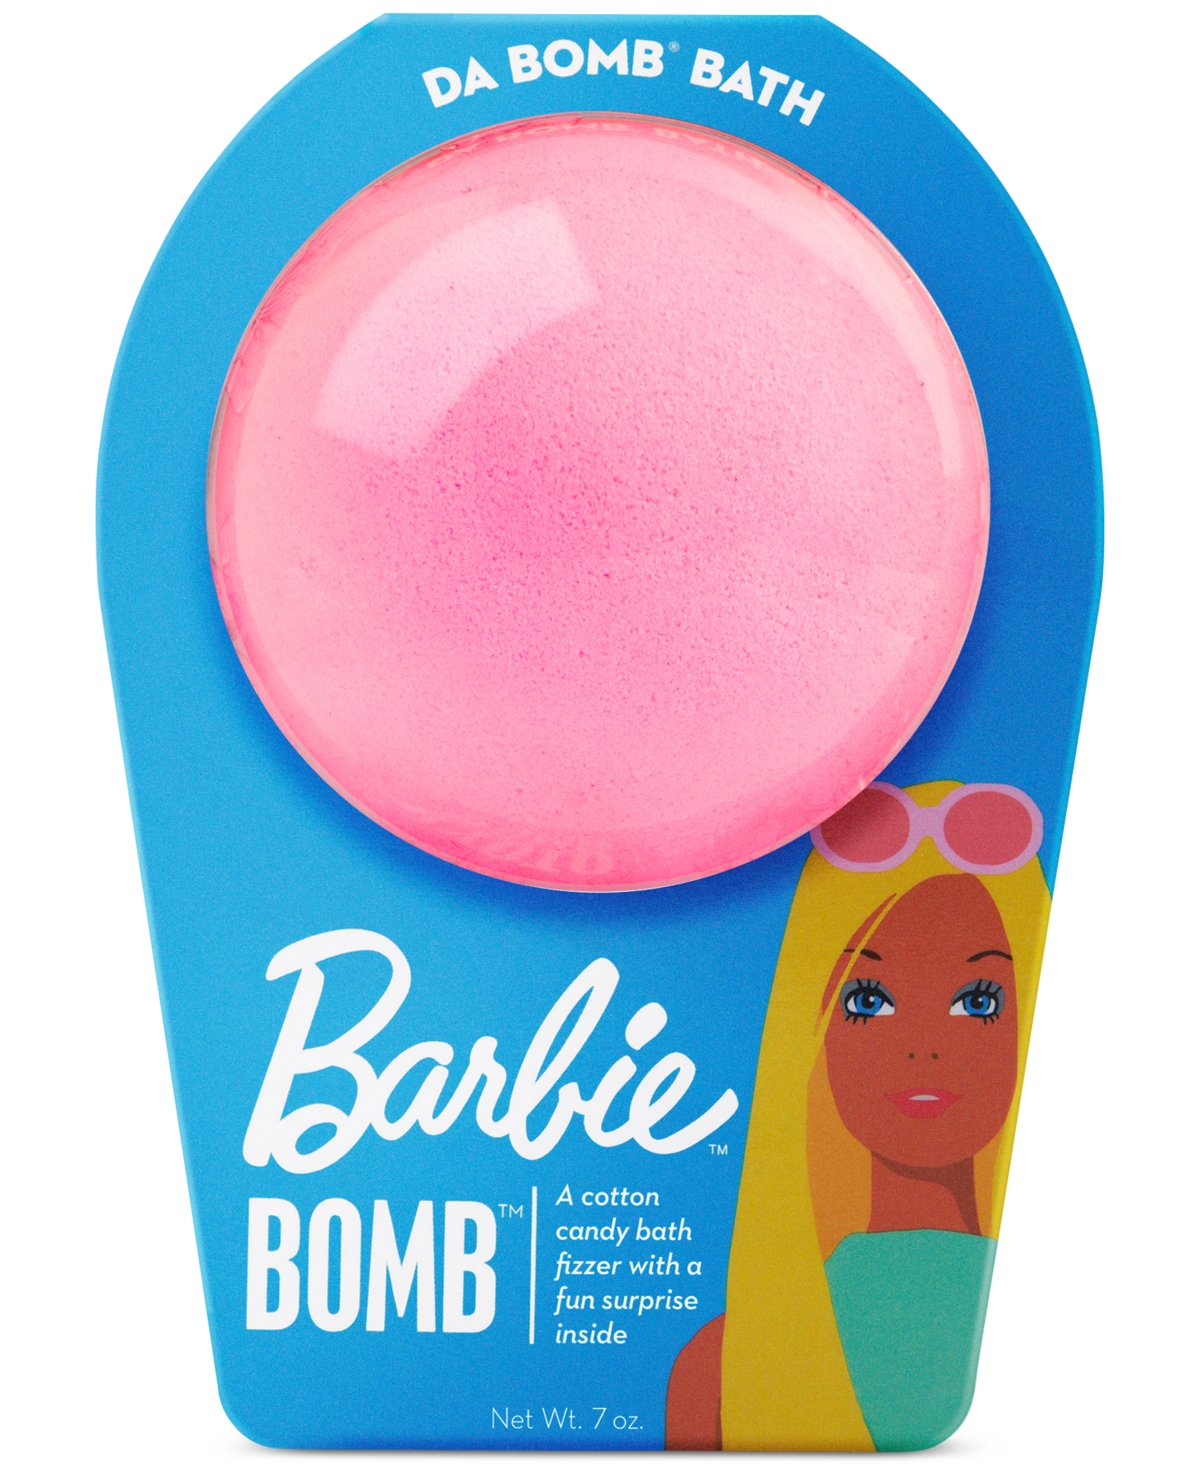 Barbie Bath Bomb, 7 oz. - Barbie Pink Bath Bomb